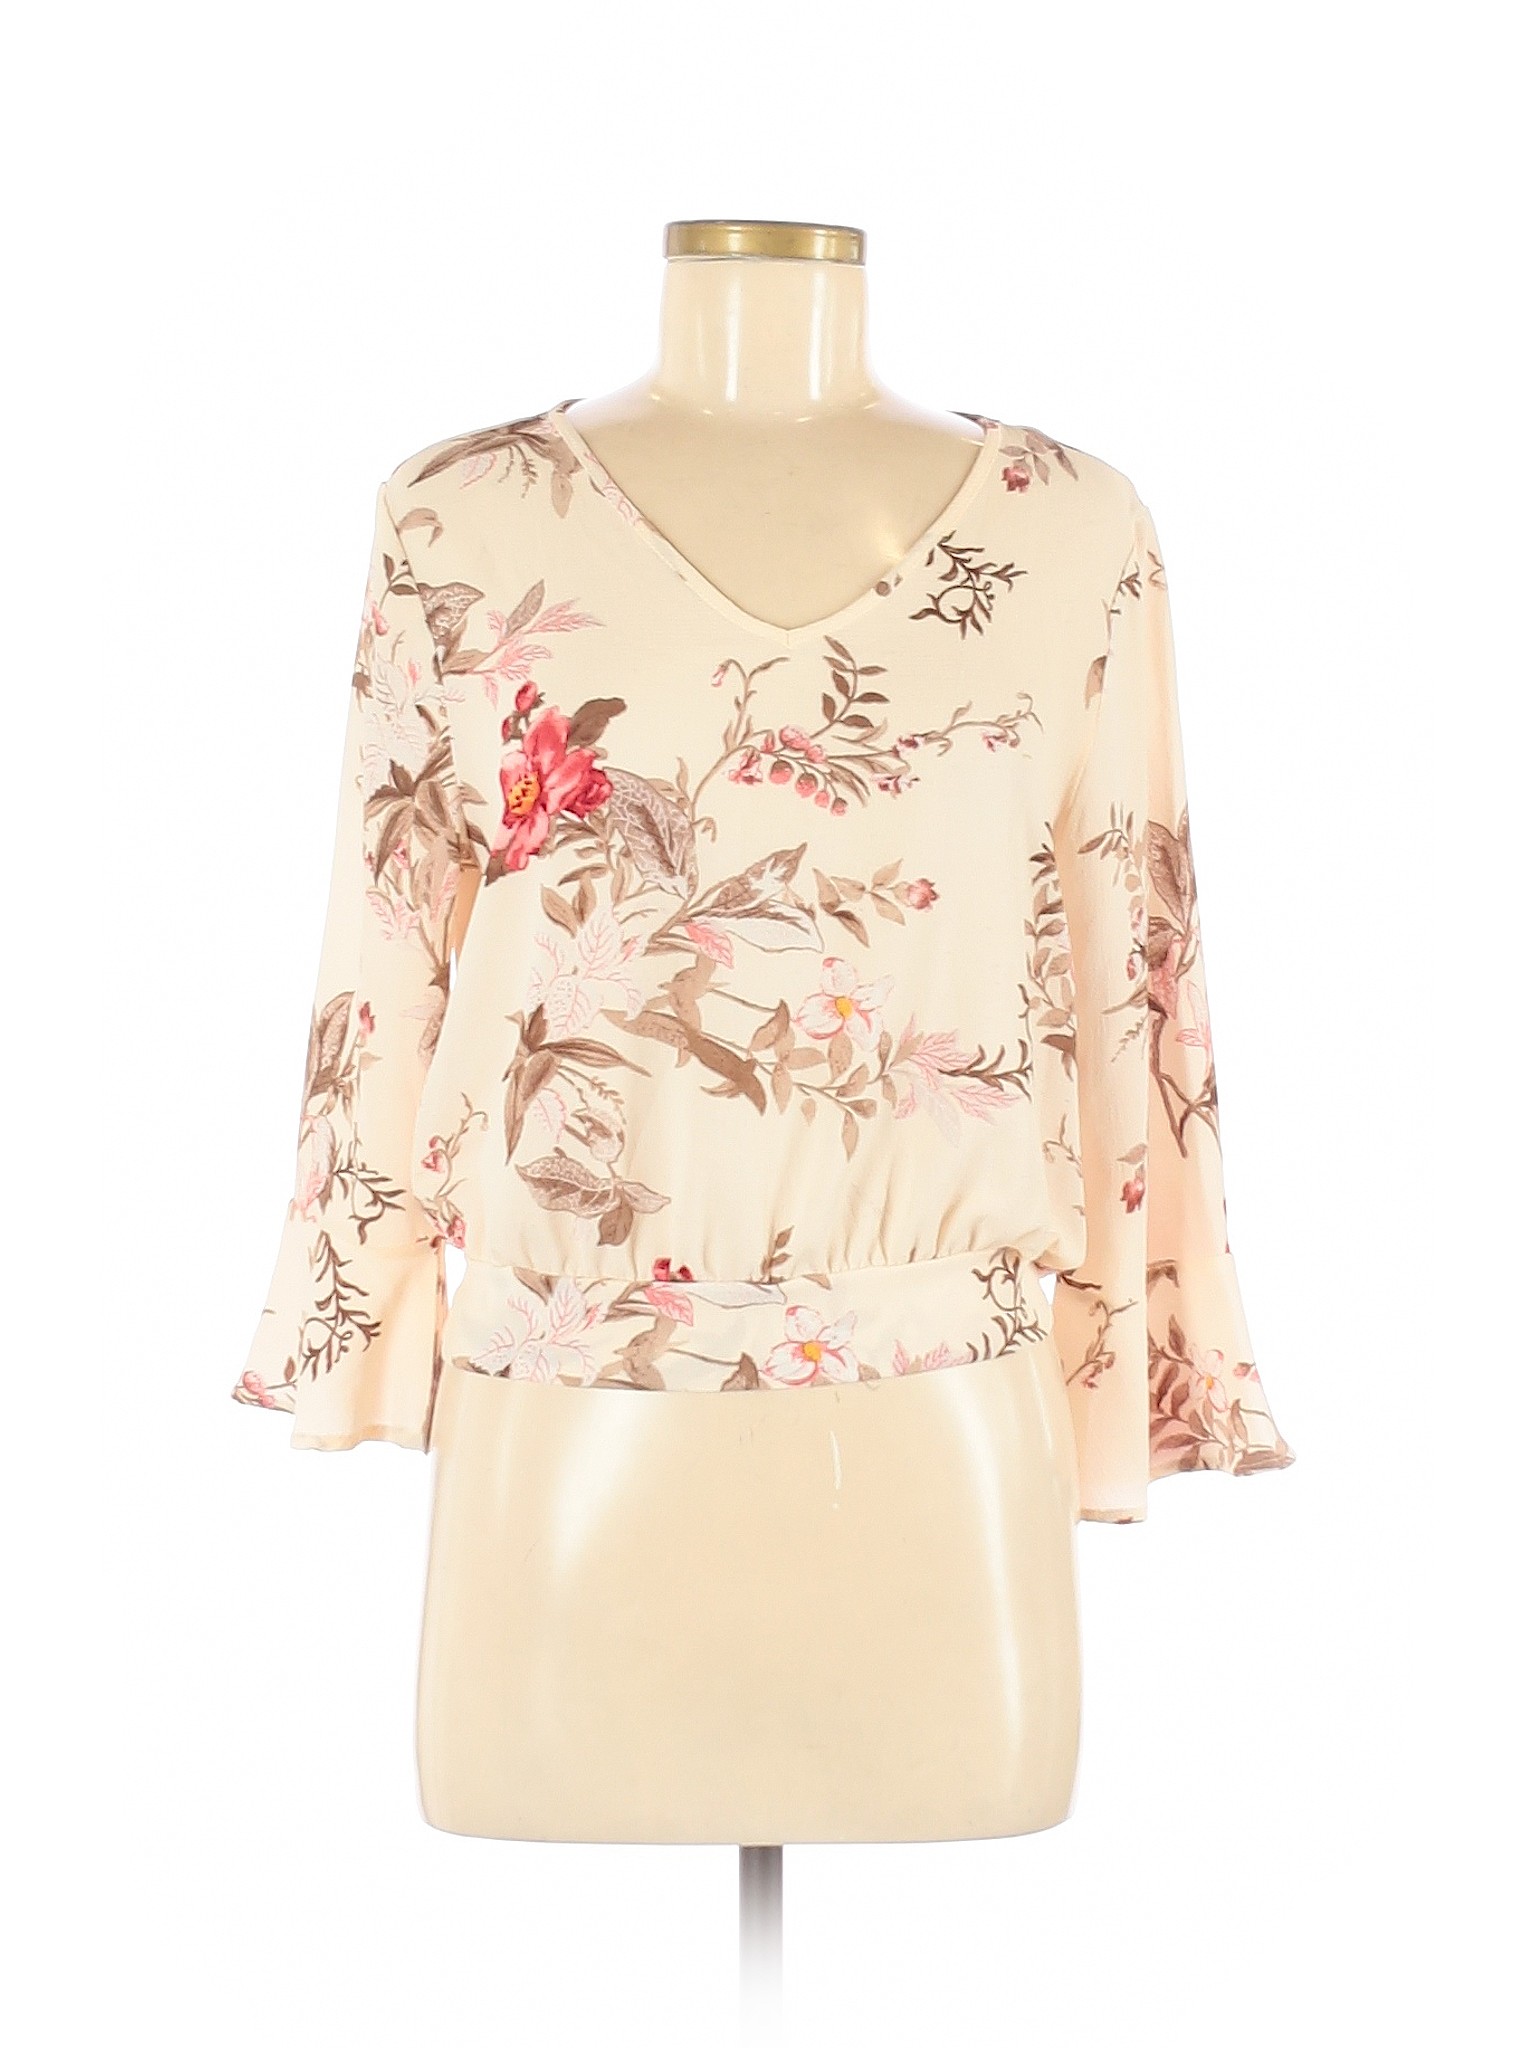 Assorted Brands Women Ivory Long Sleeve Blouse M | eBay